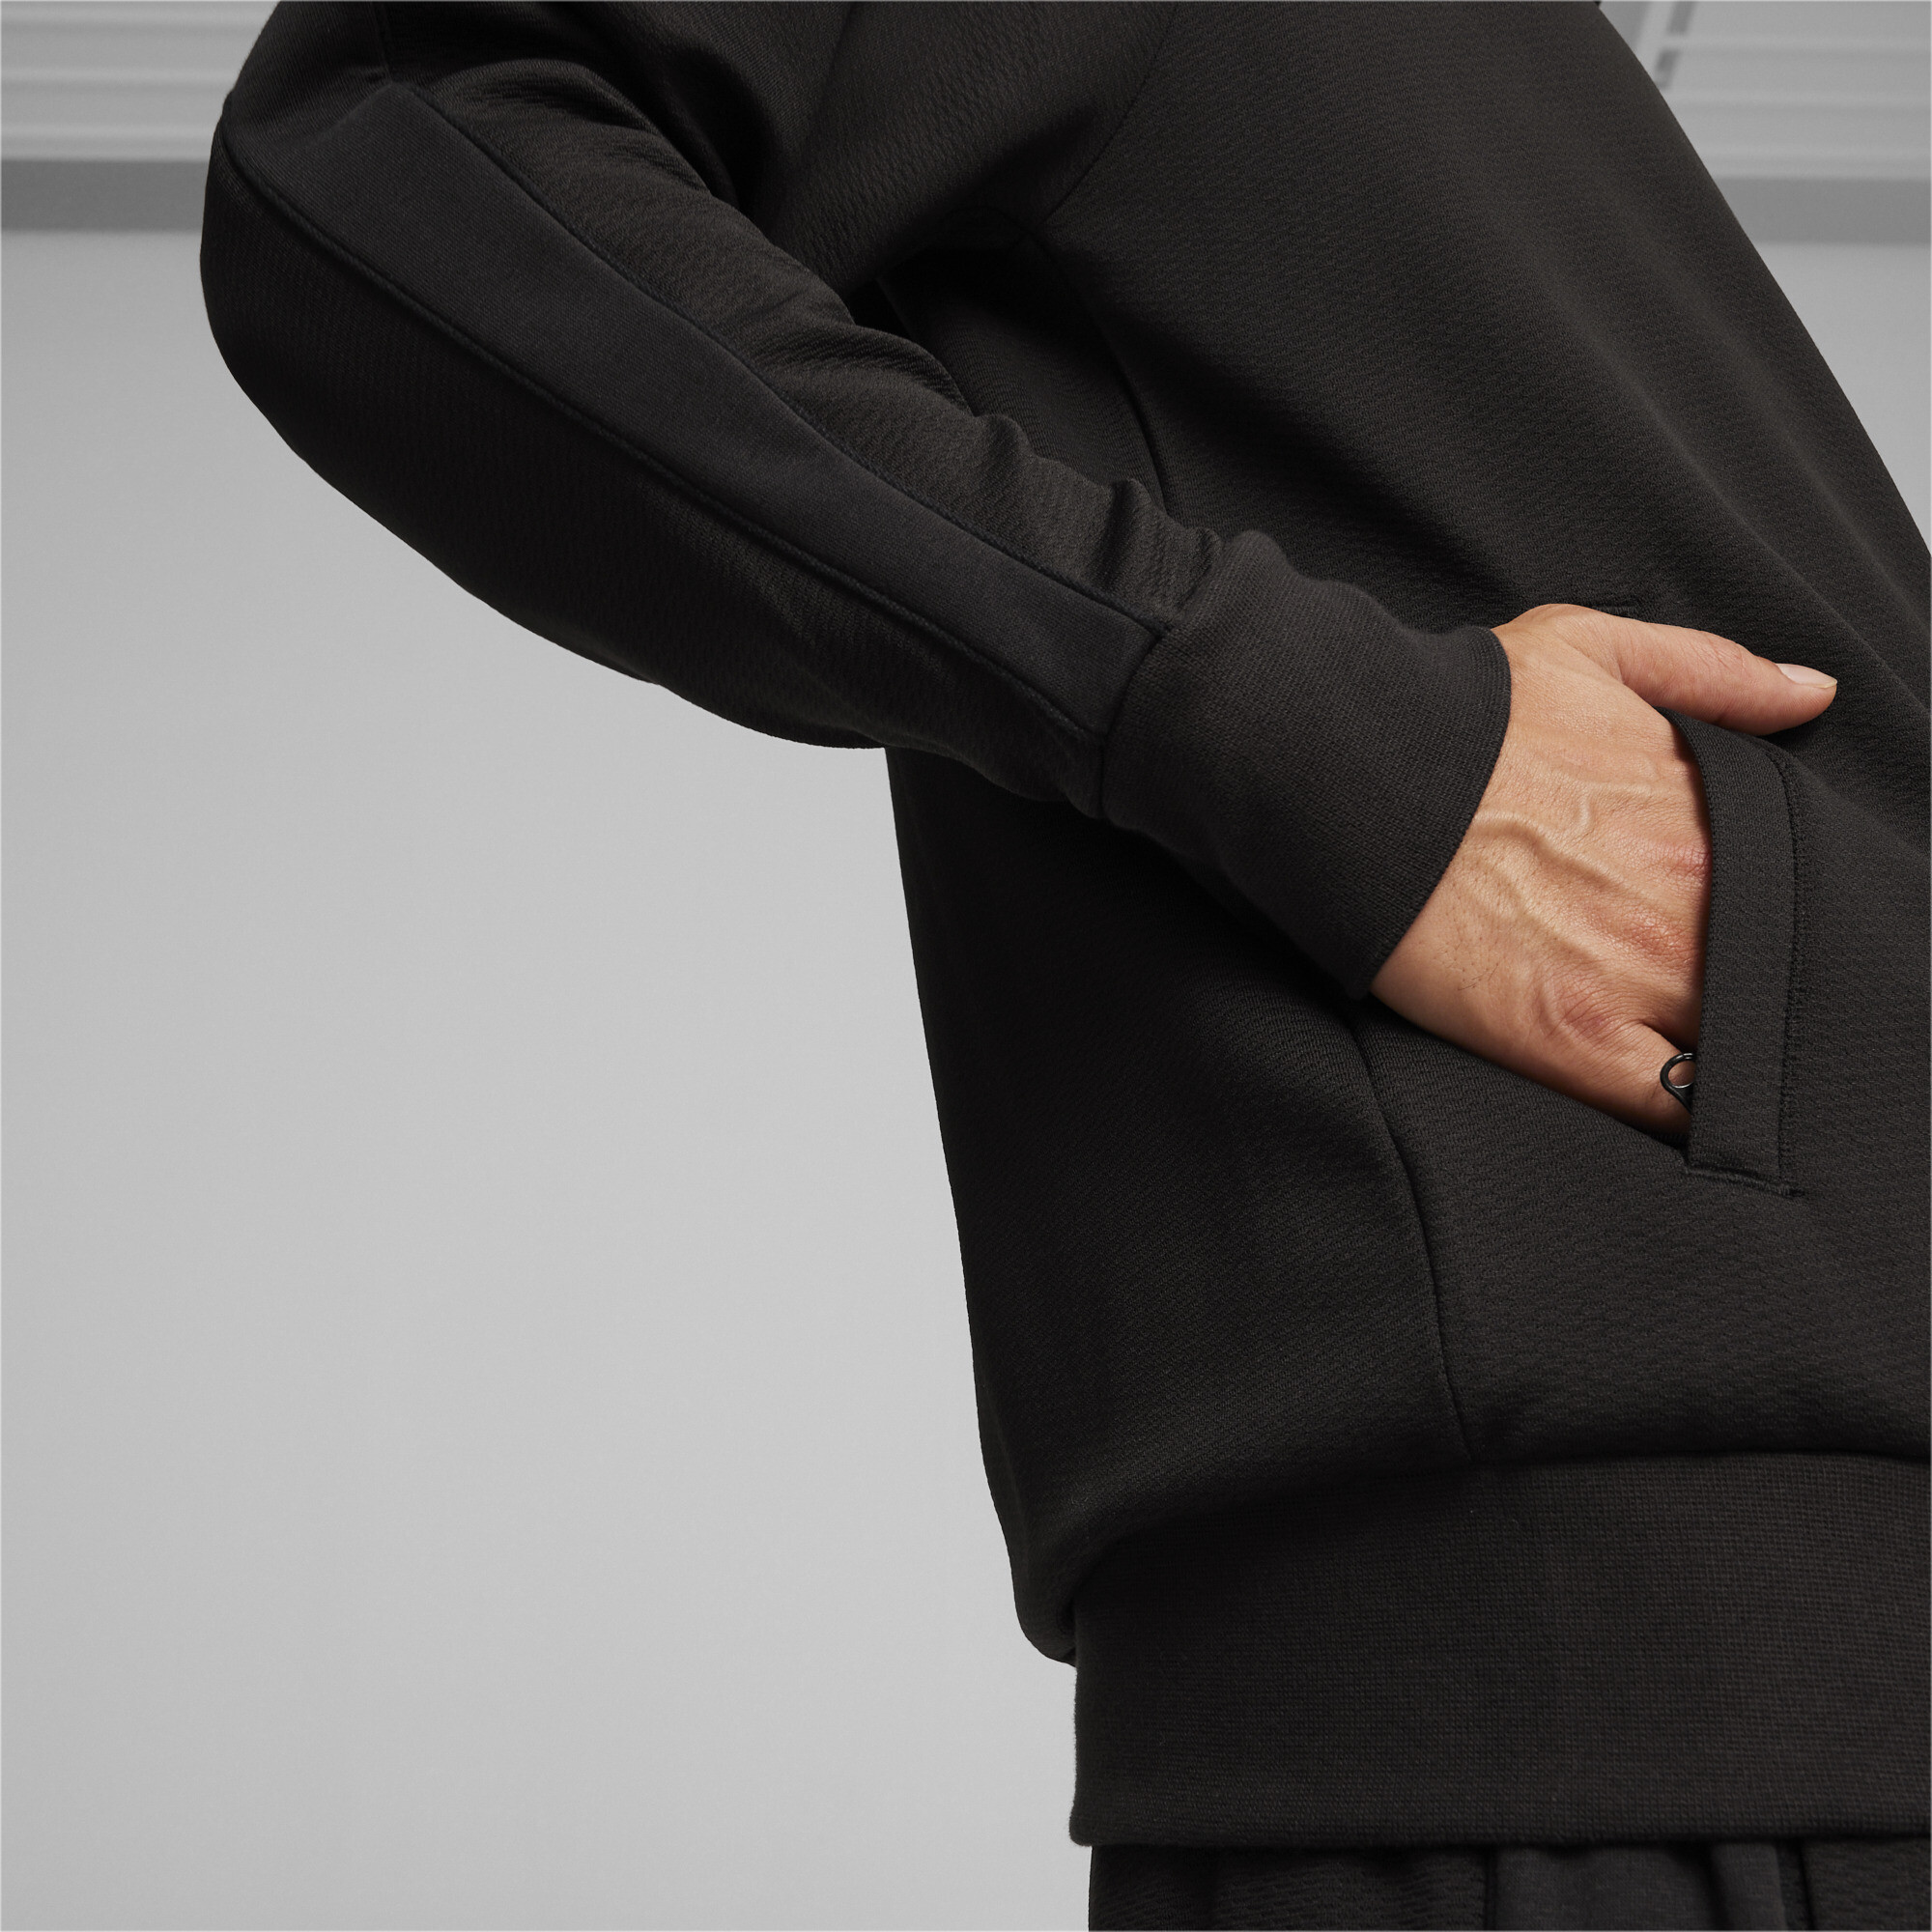 Men's PUMA T7 Track Jacket In Black, Size Small